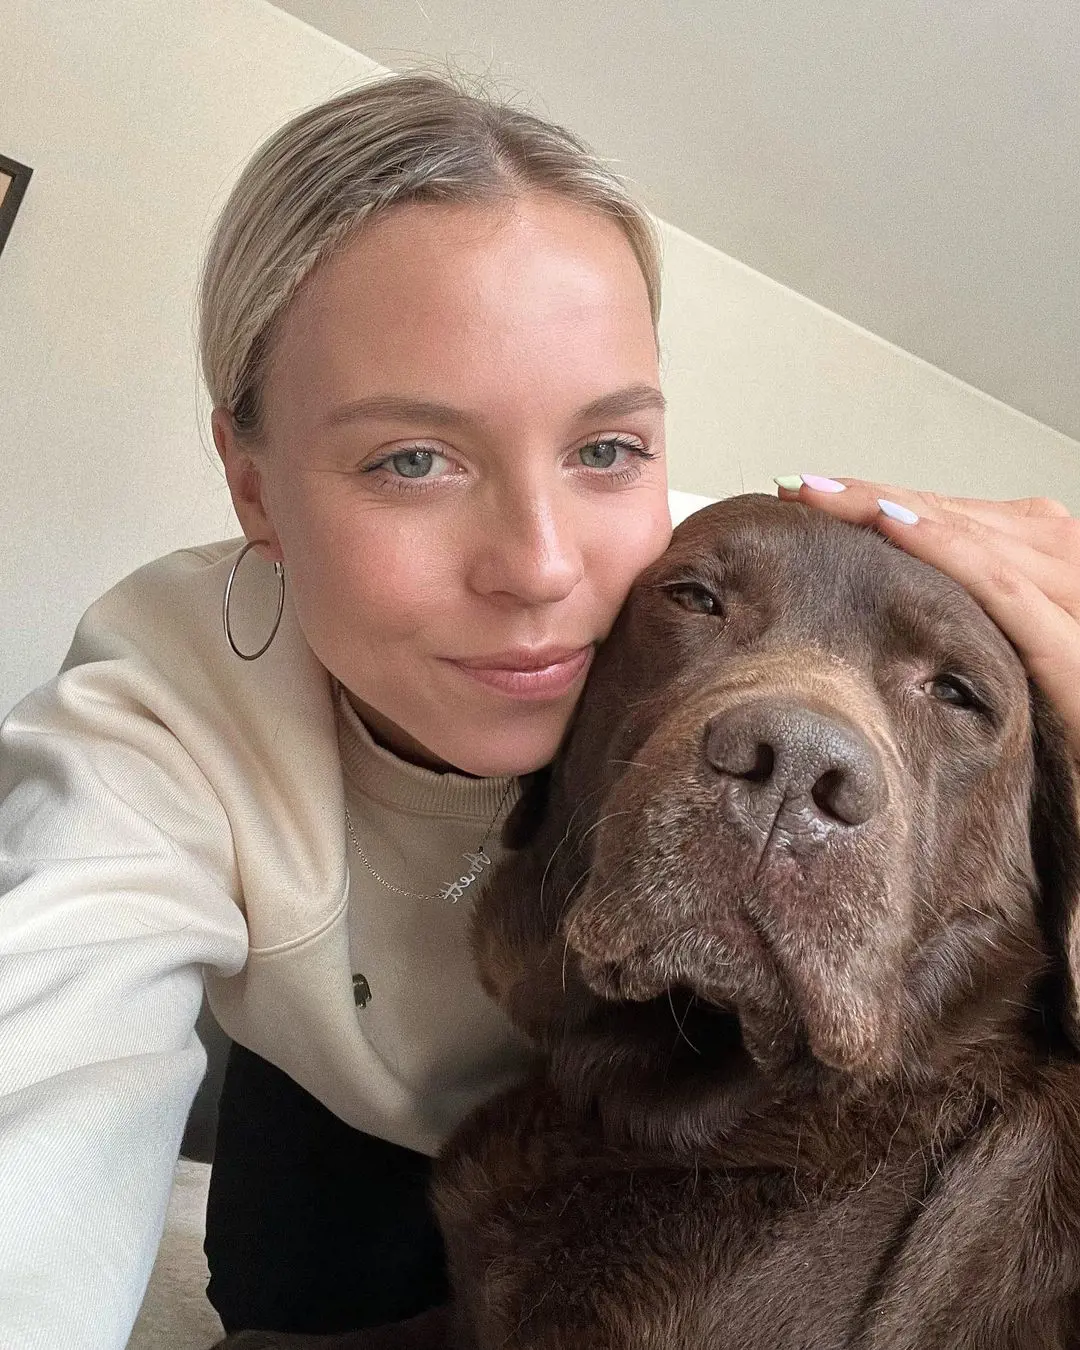 Kontaveit with her pet dog, Milo